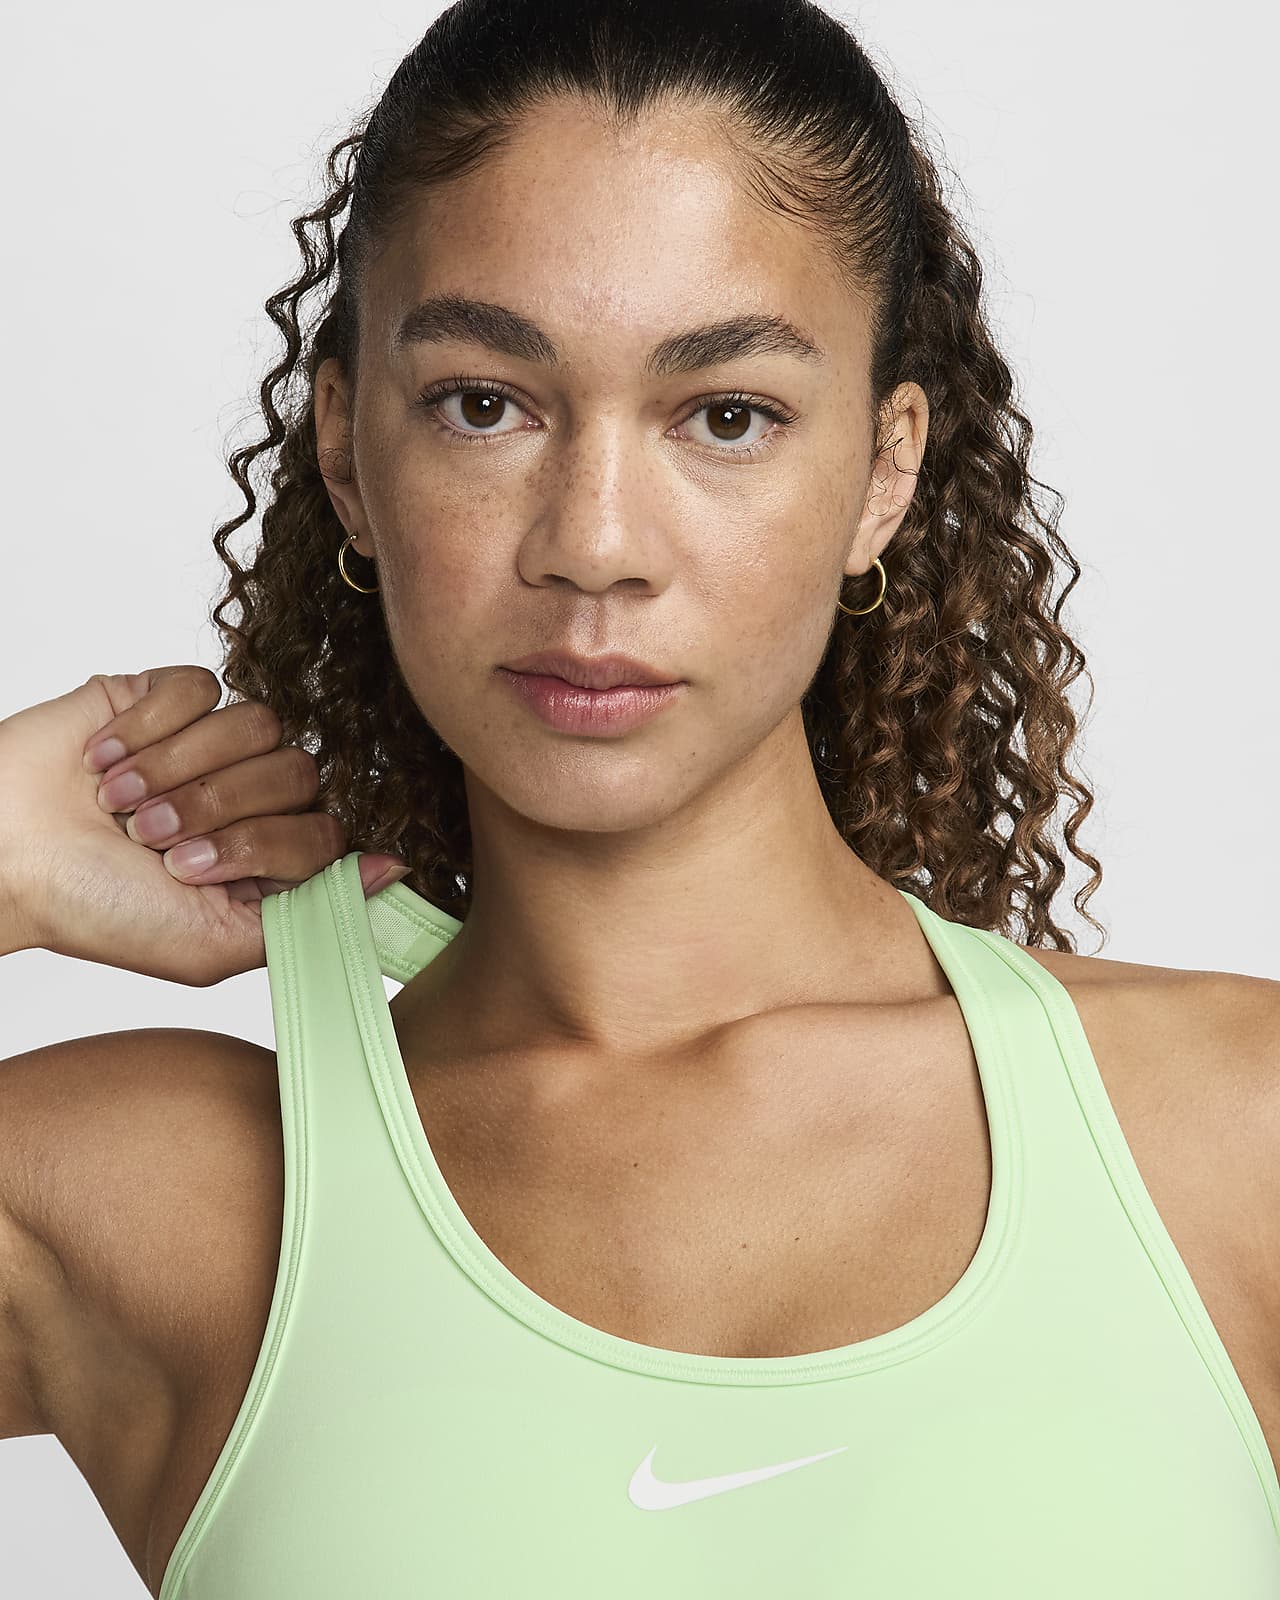 Nike Swoosh Medium Support Women's Padded Sports Bra.